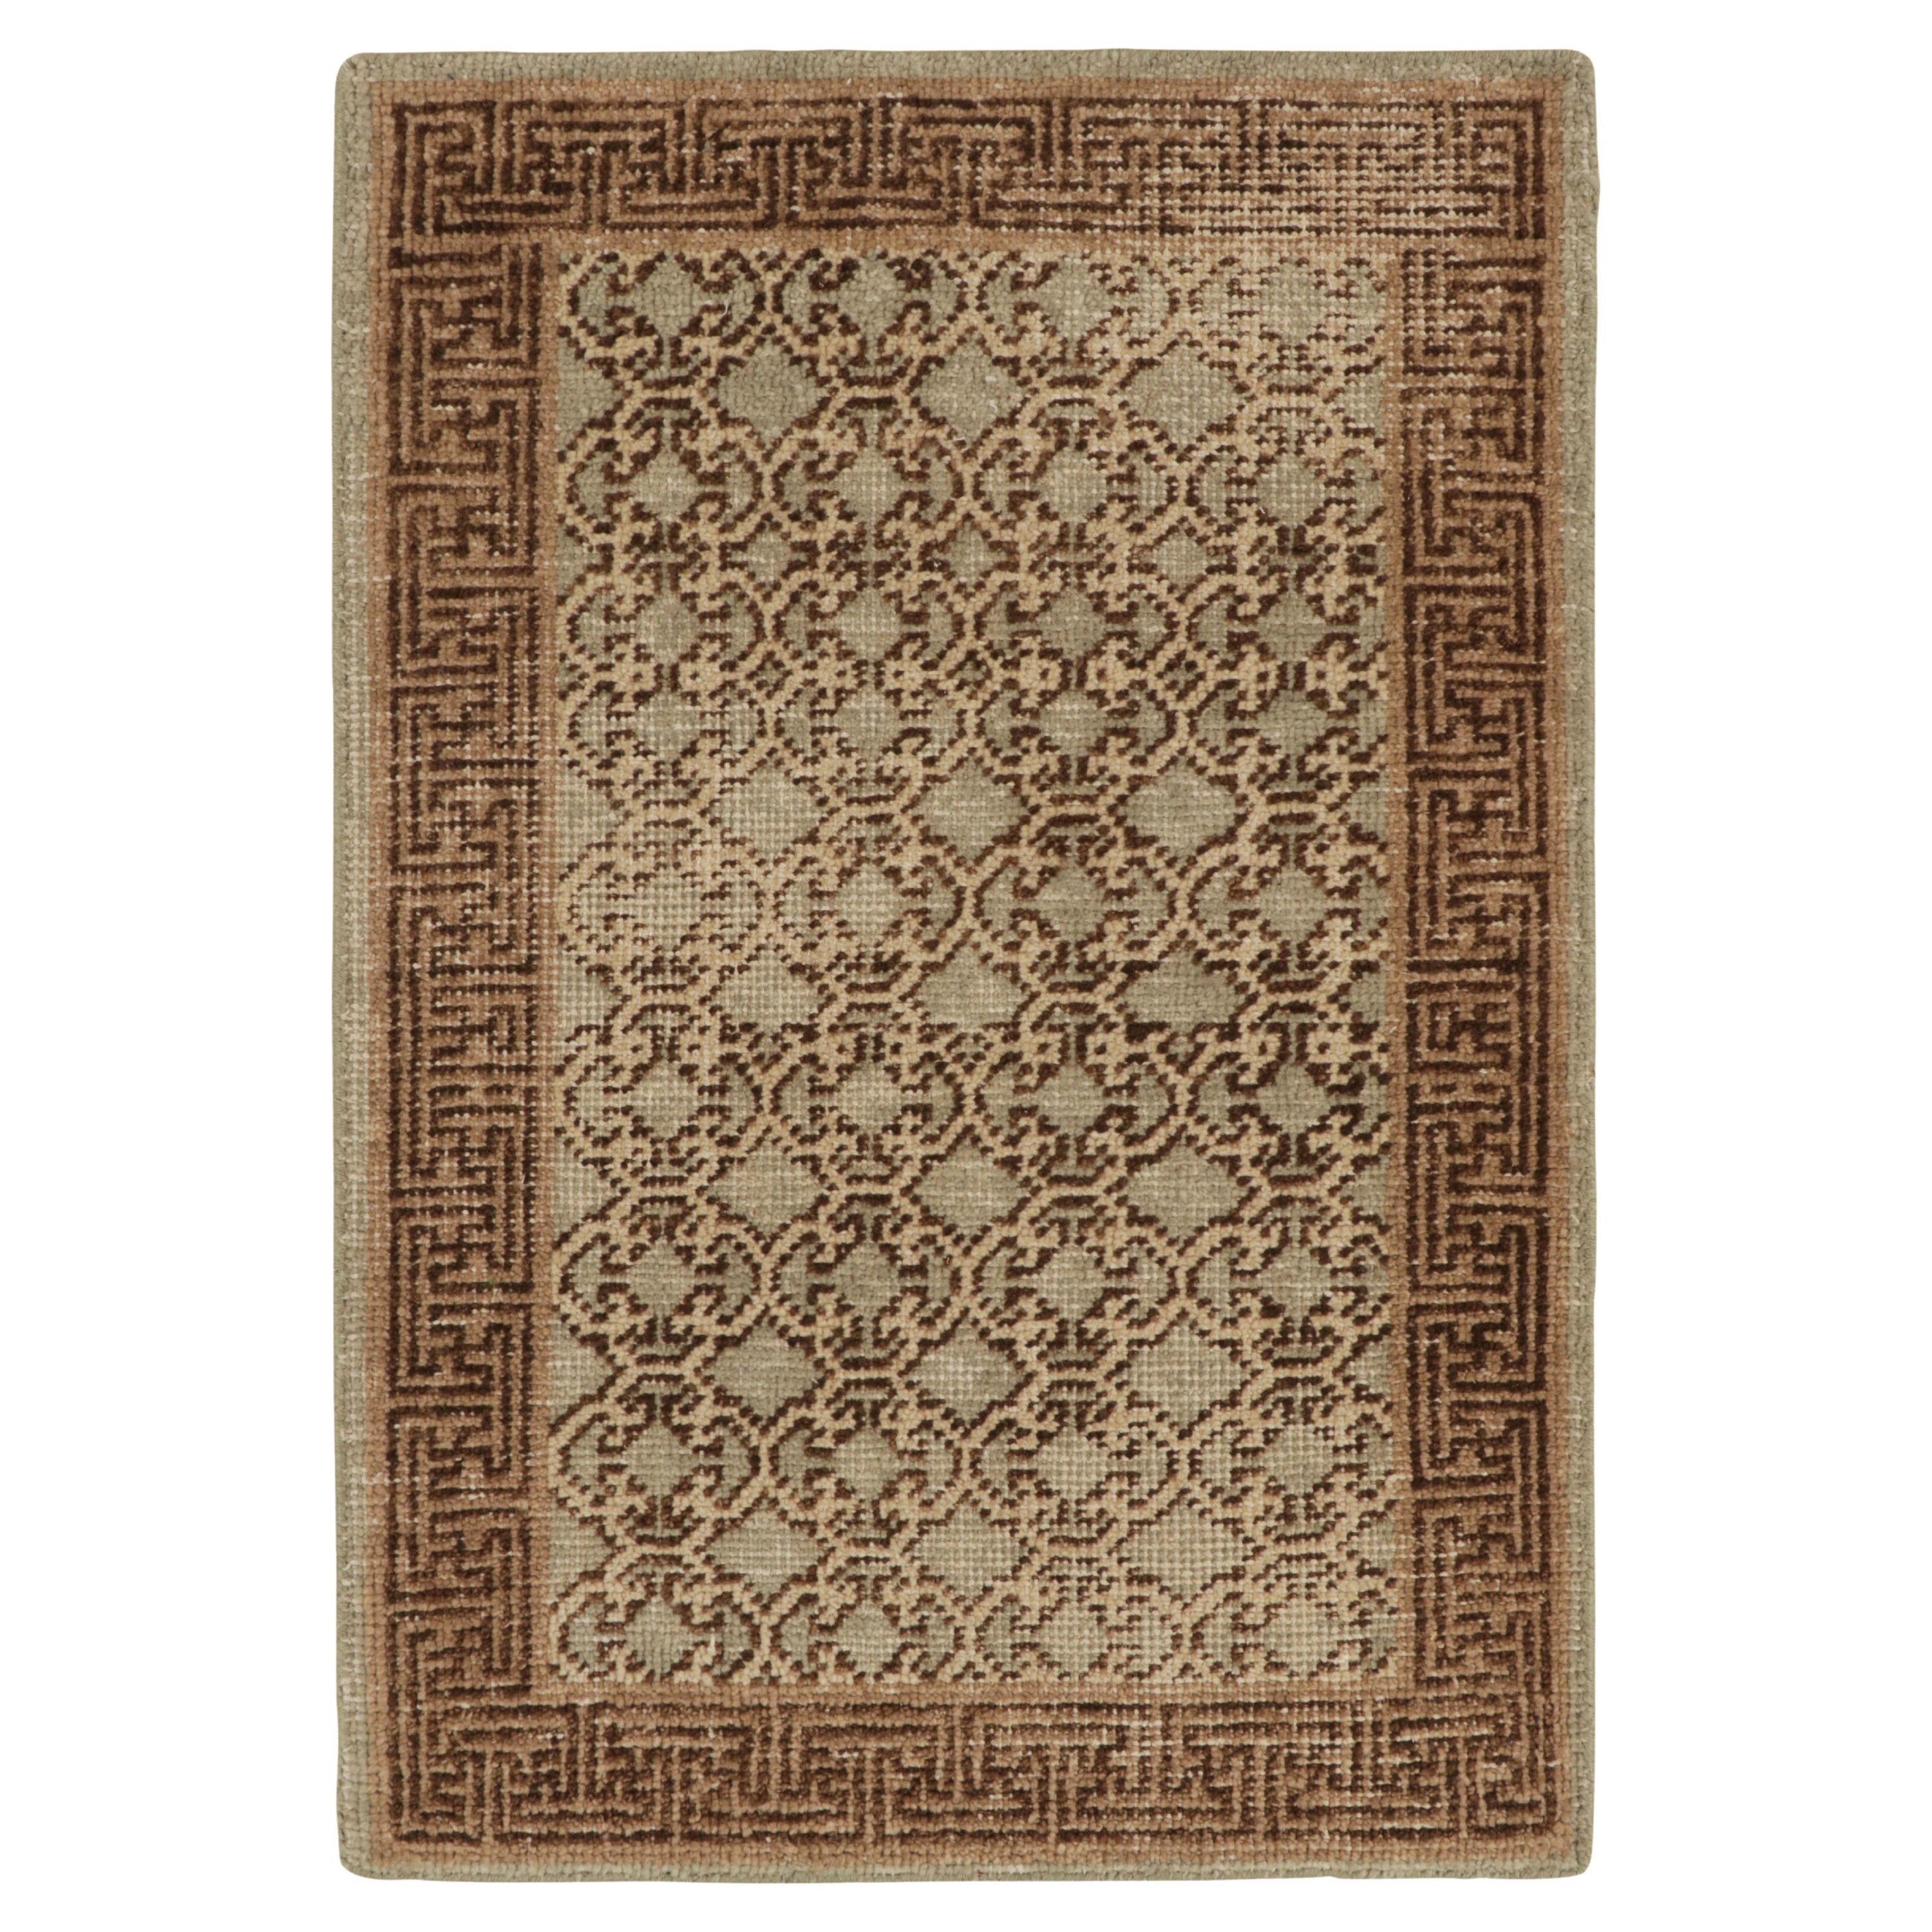 Rug & Kilim's Distressed Khotan Style Teppich in Grau, Beige-Braun Spalier-Muster